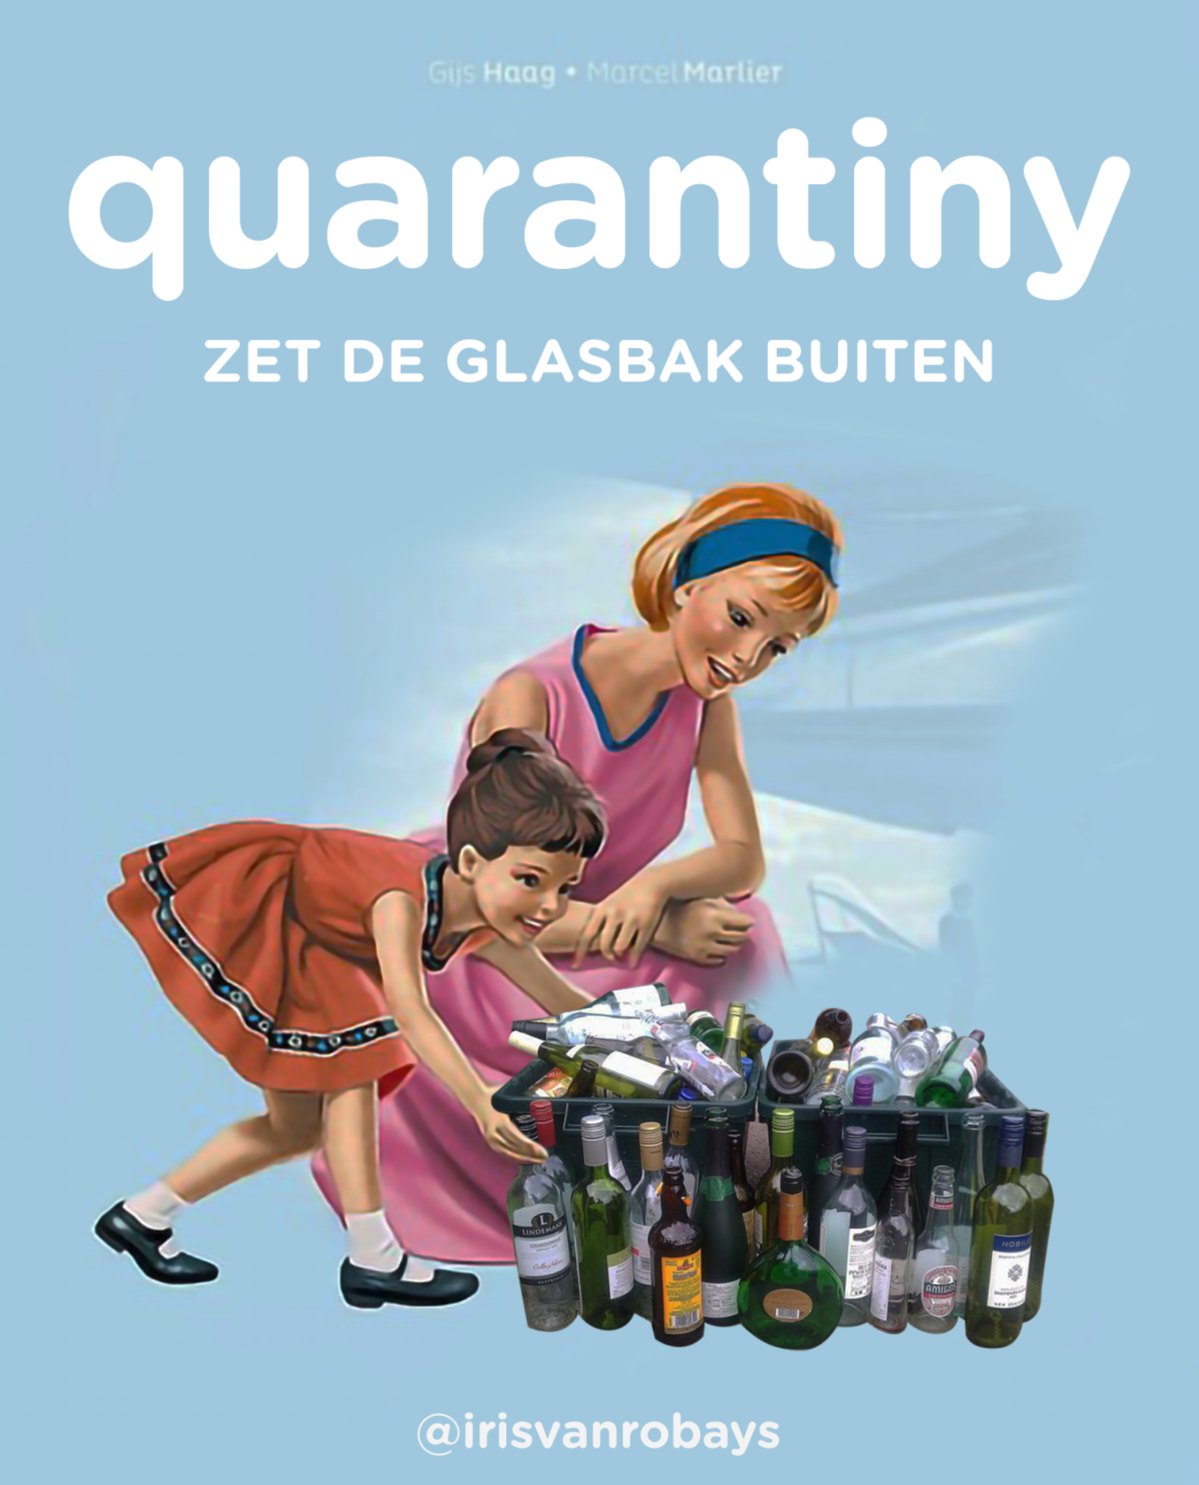 'Quarantiny' scoort op sociale media en is op-en-top West-Vlaams